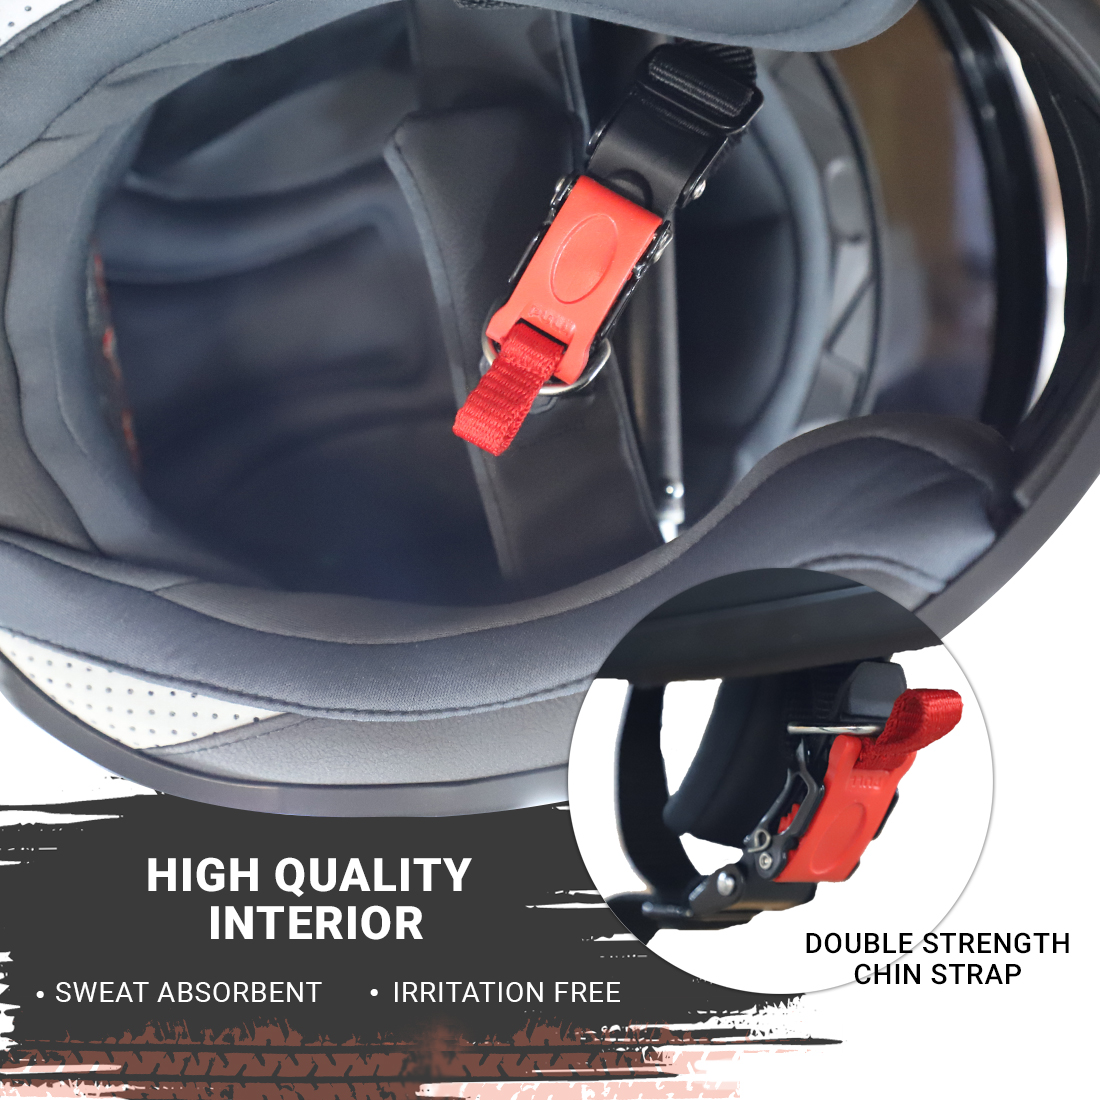 Steelbird SBH-17 Terminator ISI Certified Full Face Graphic Helmet (Matt Black Fluo Red With Smoke Visor)